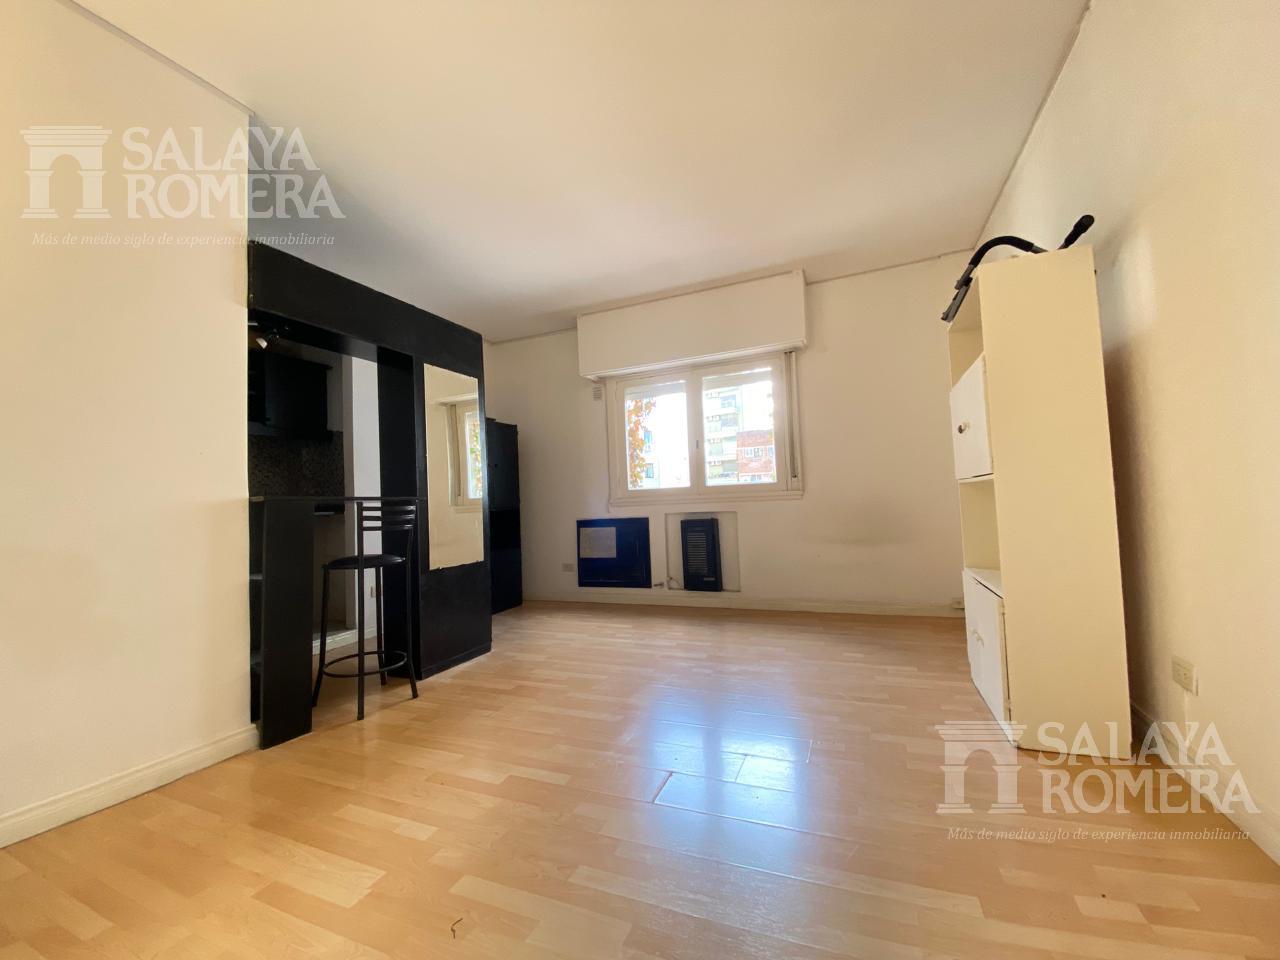 #5132729 | Rental | Apartment | Recoleta (Salaya Romera Propiedades)